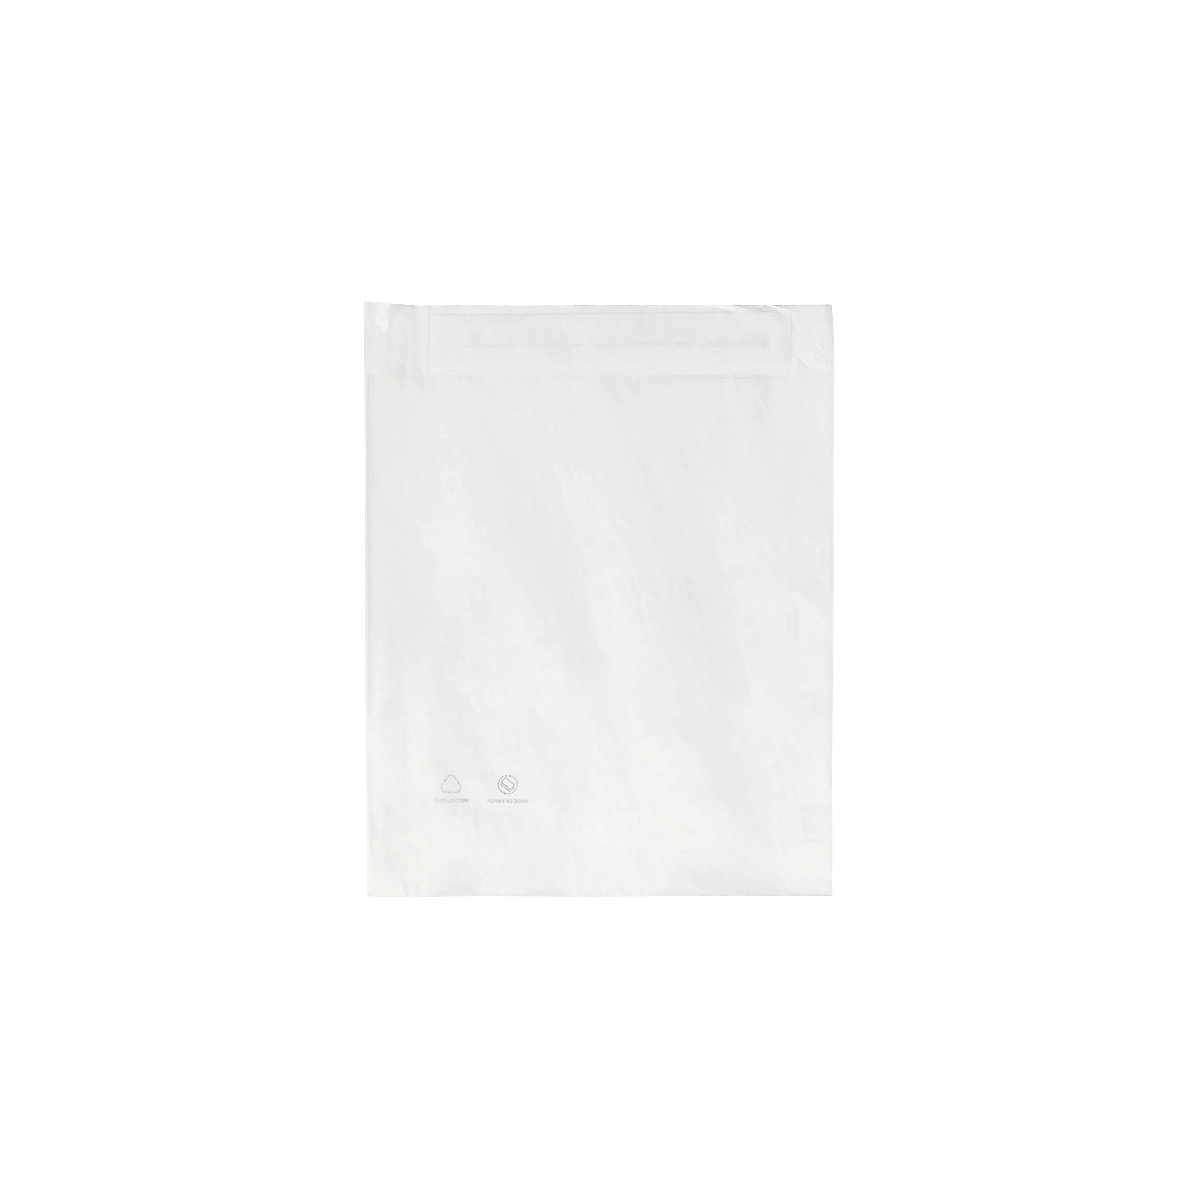 Sacchetti piatti con strisce adesive – terra, in carta pergamina, lungh. x largh. 300 x 250 mm, conf. da 250 pz., a partire da 10 conf.-1